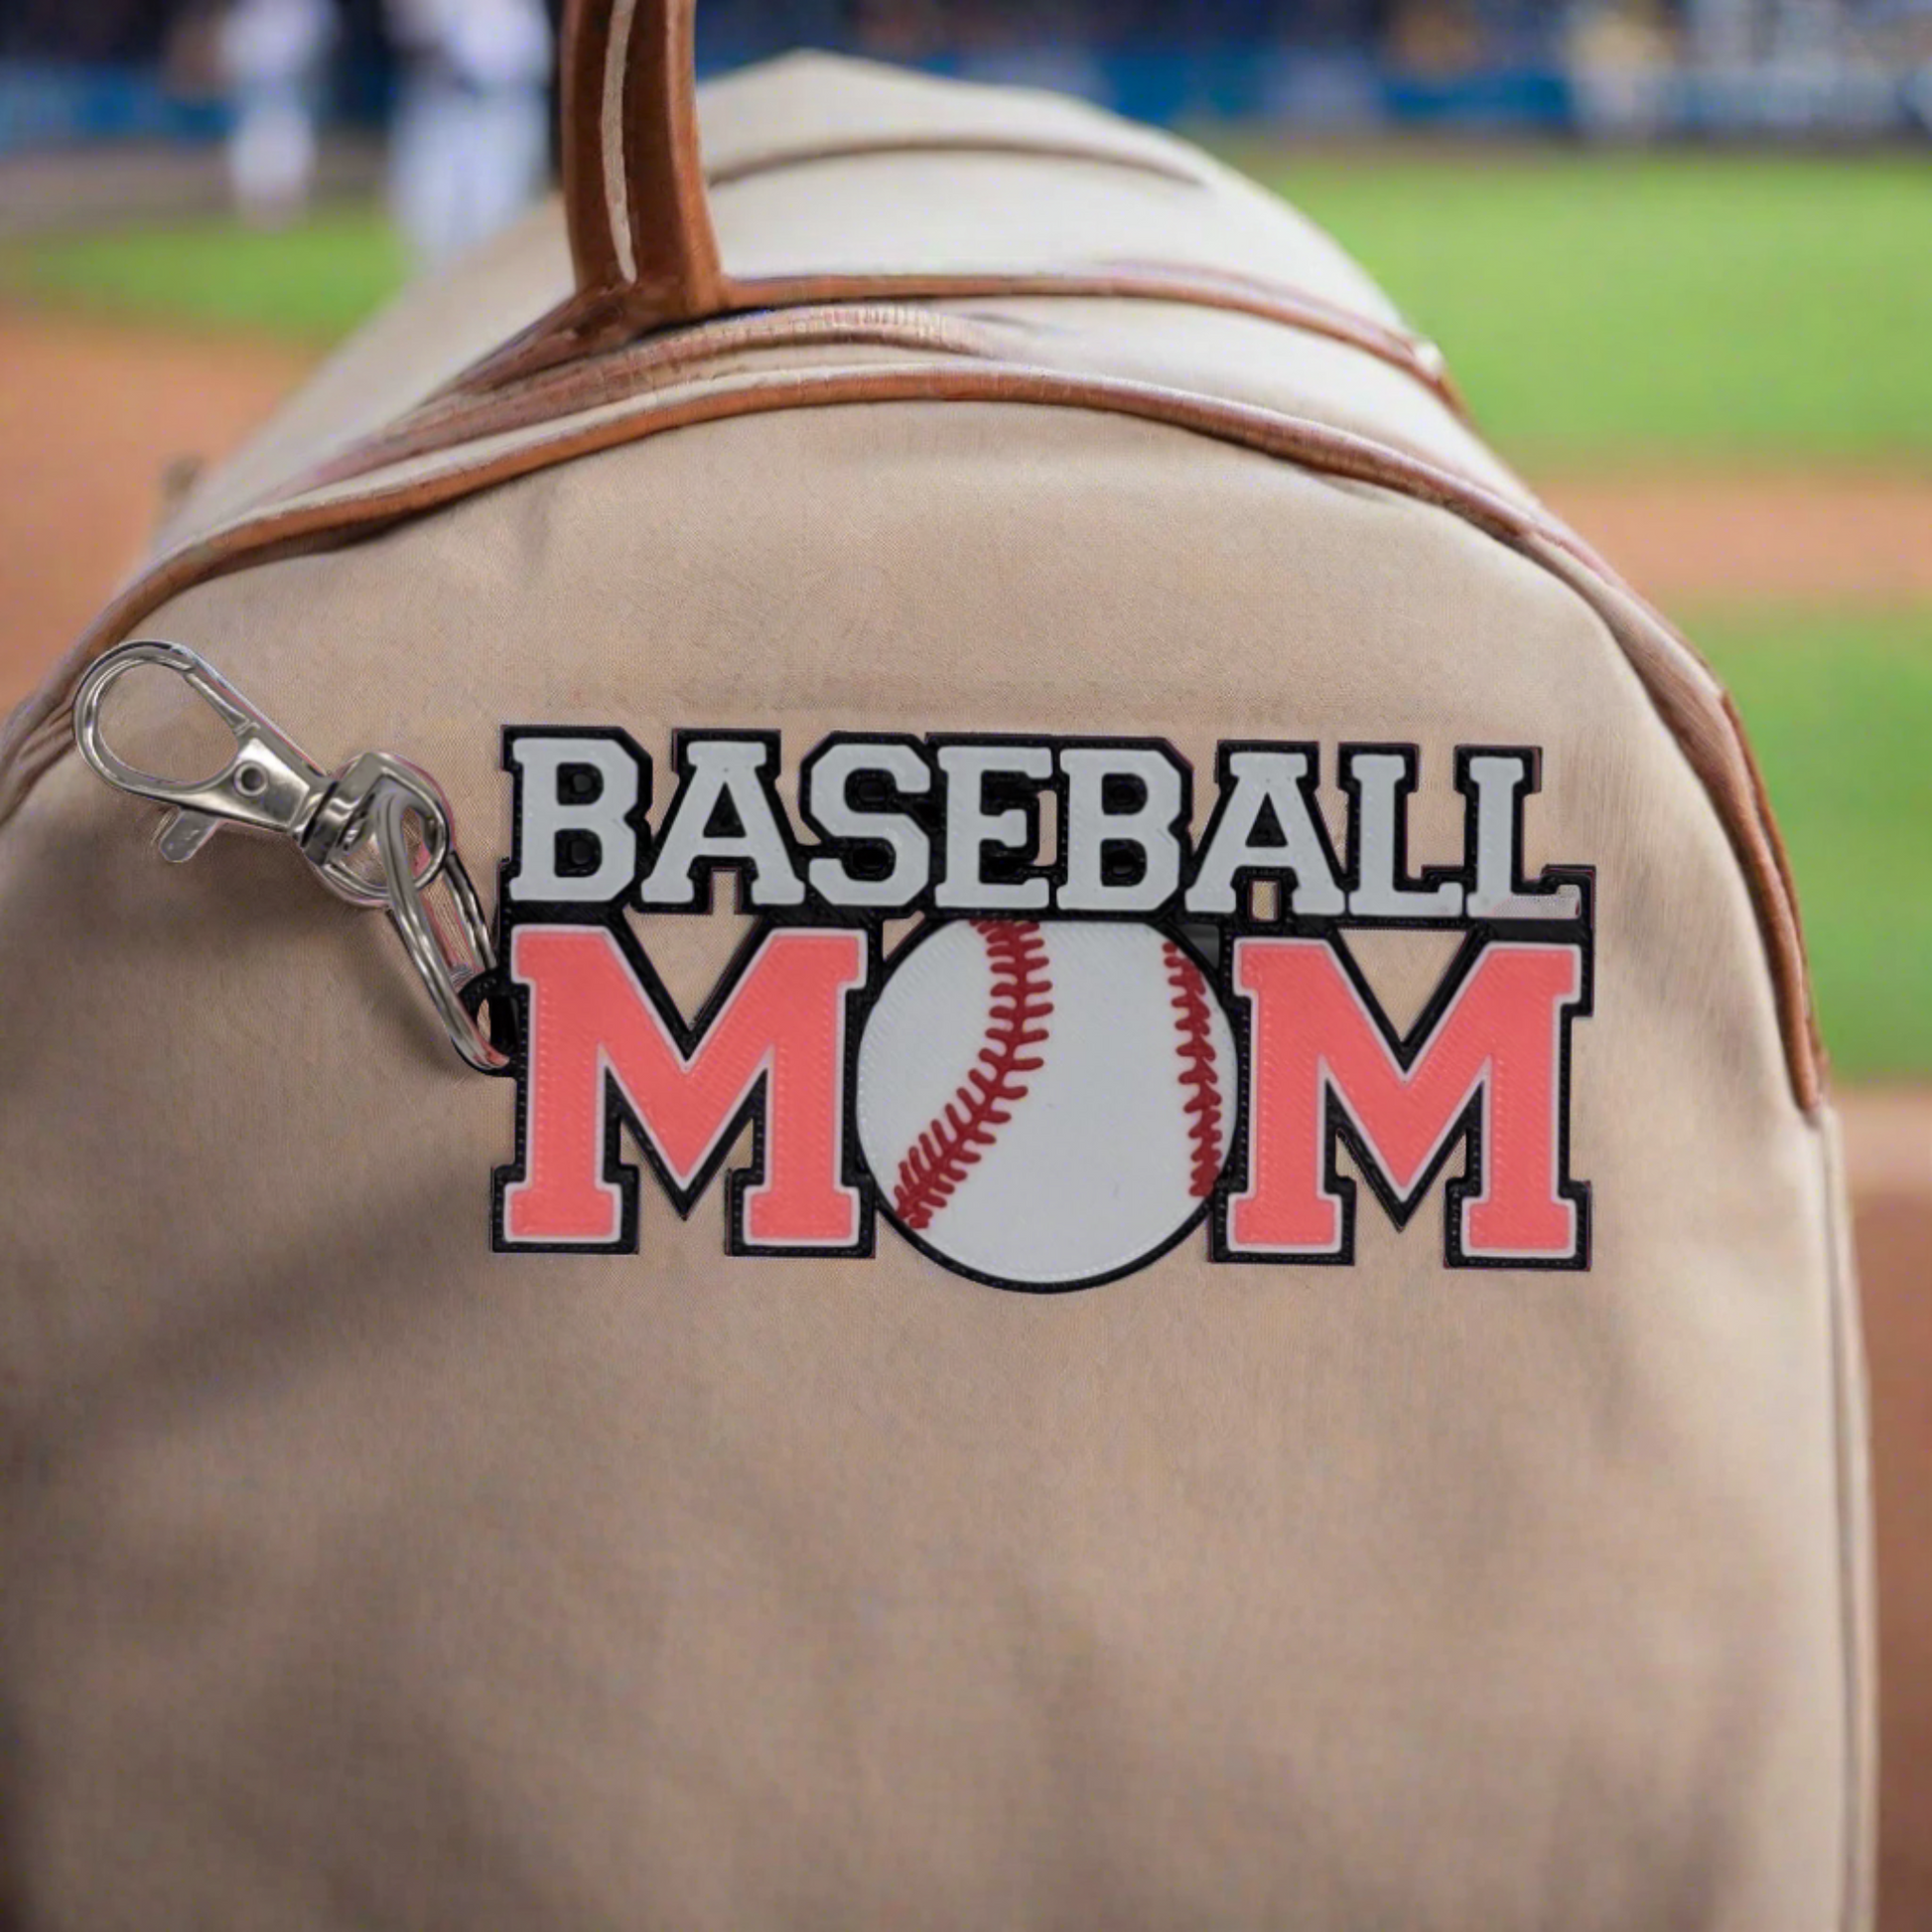 Baseball mom bag tag in stadium